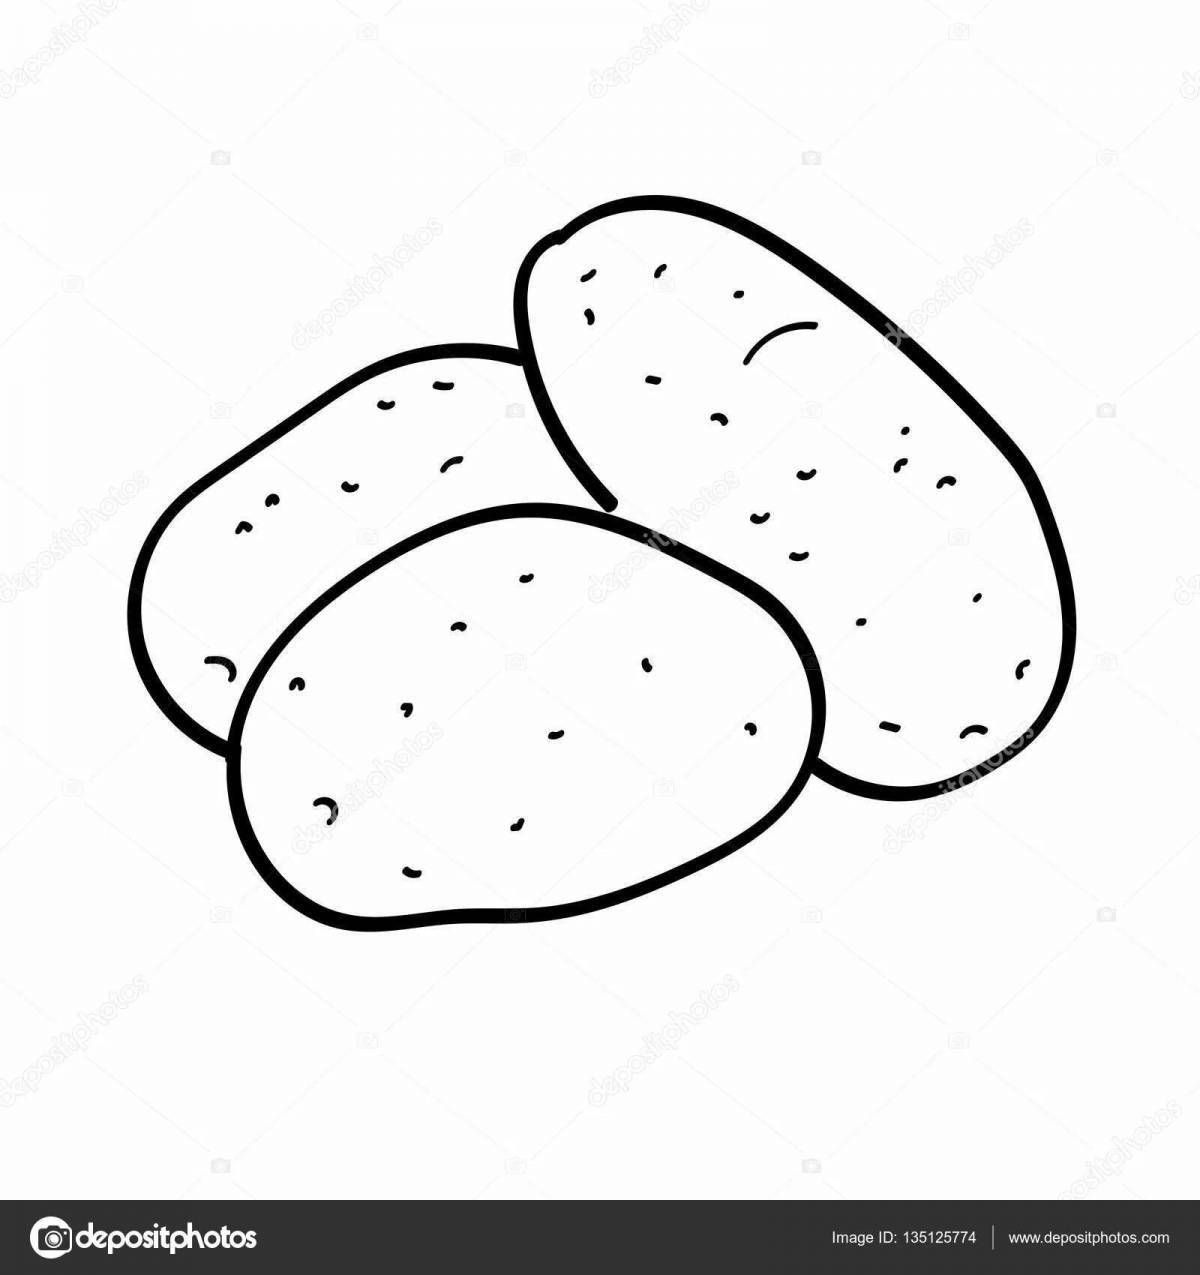 Baby potatoes #2